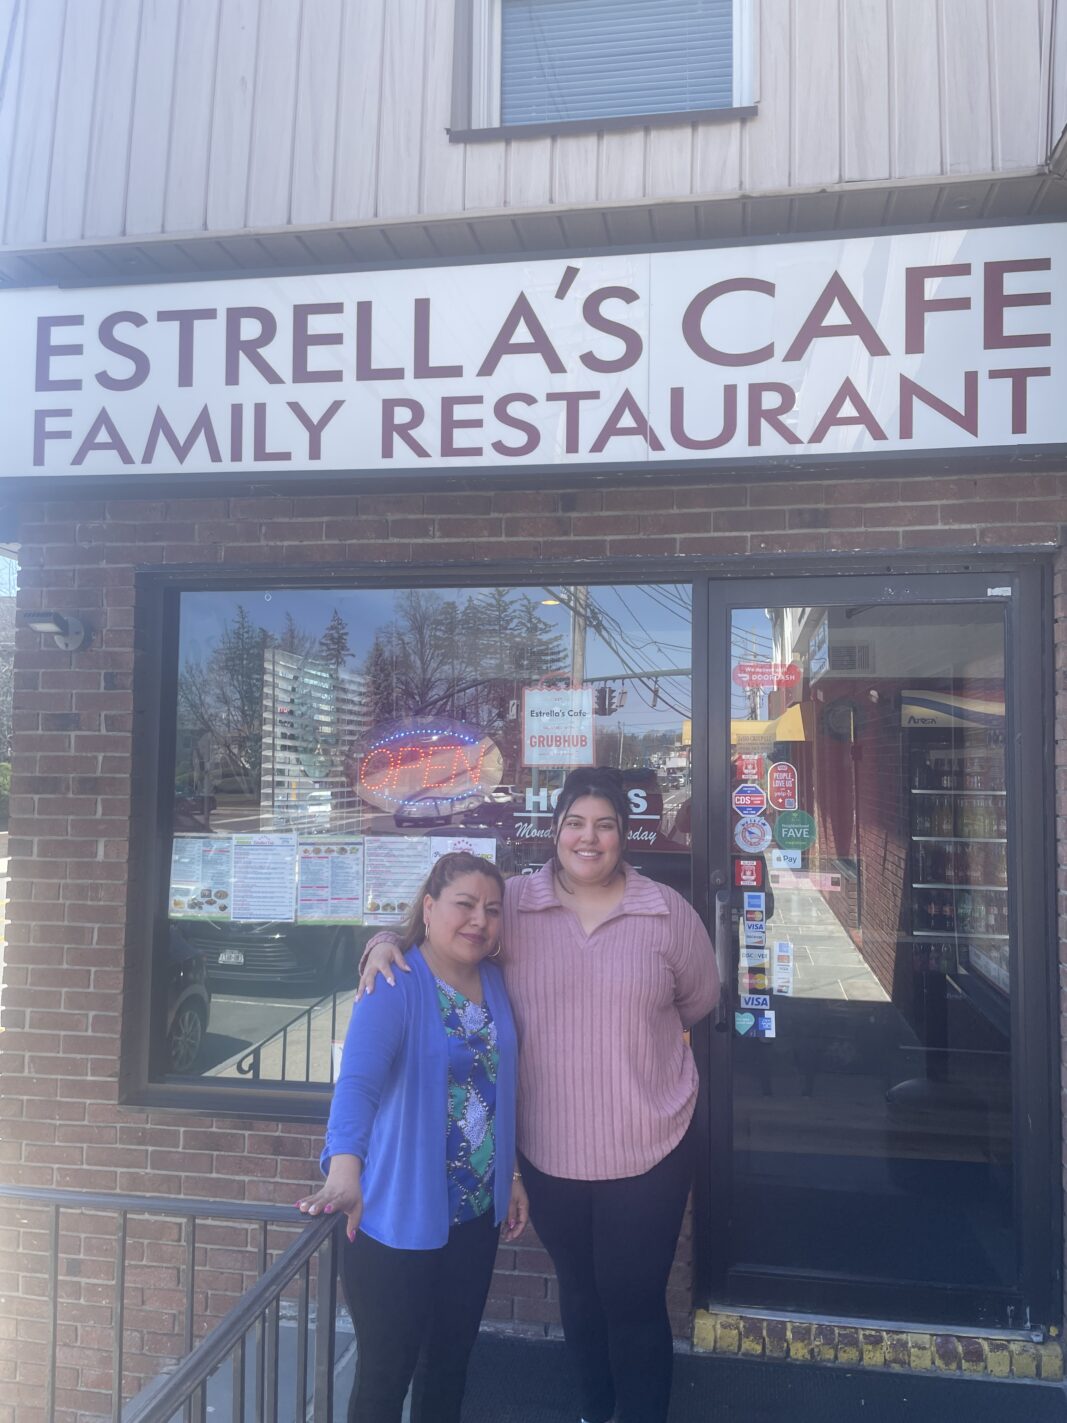 Estrella’s Cafe serves tasty Mexican American cuisine | The Rockland ...